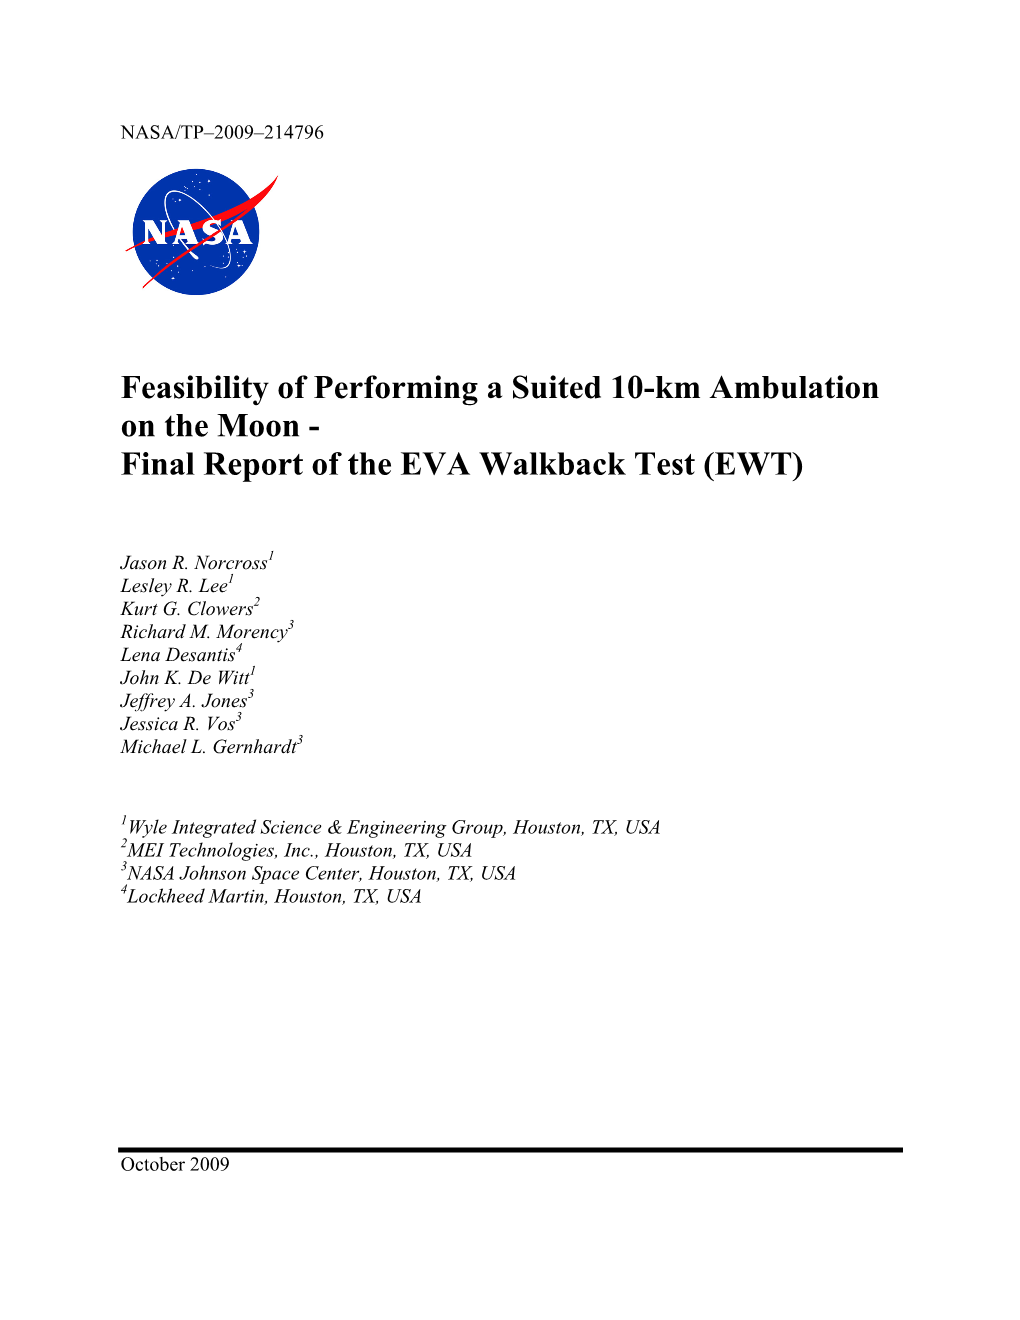 Final Report of the EVA Walkback Test (EWT)